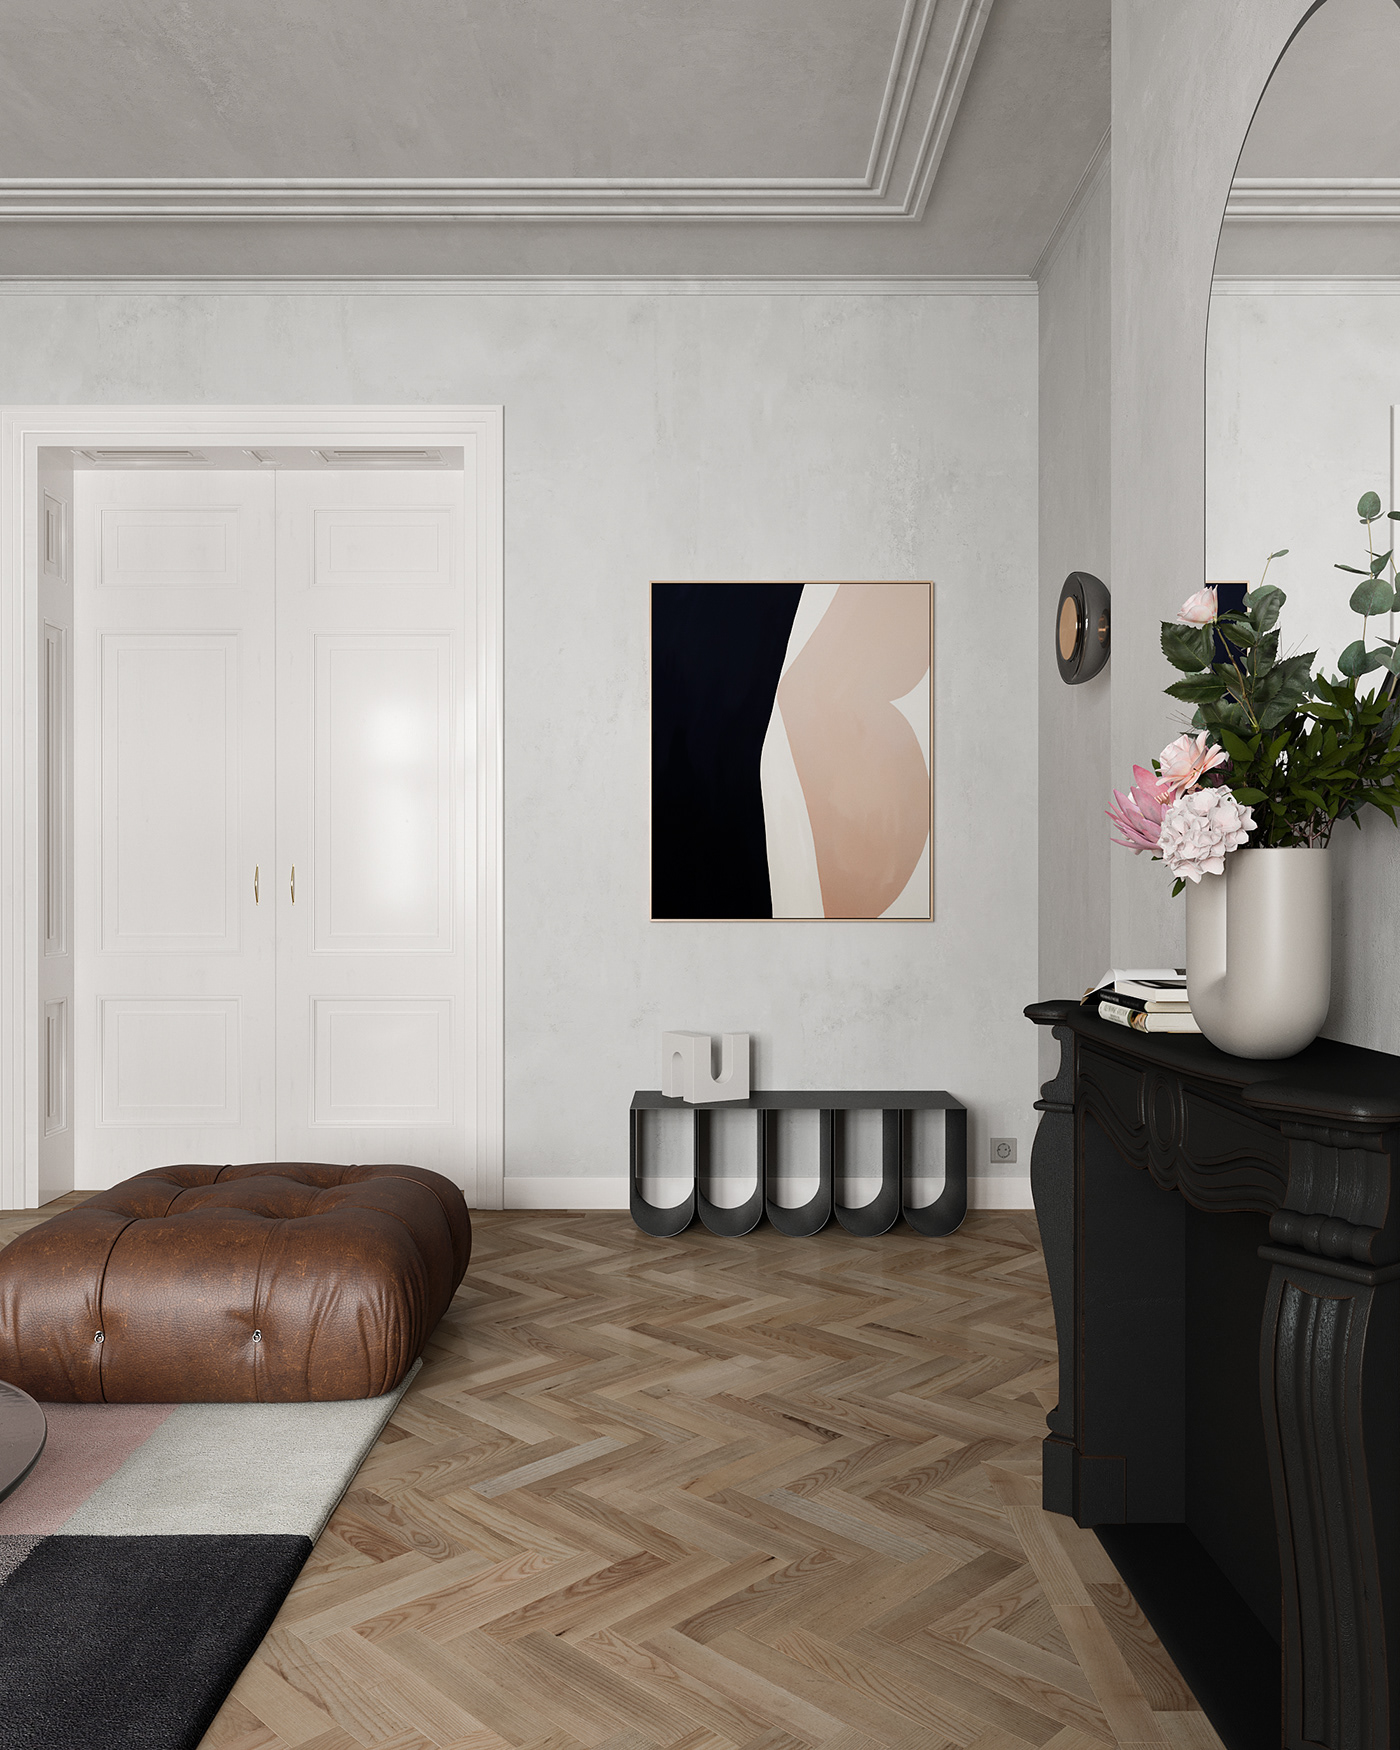 3ds max 3dvisualization architecture archviz CGI chaosgroup interior design  luxury apartments vray